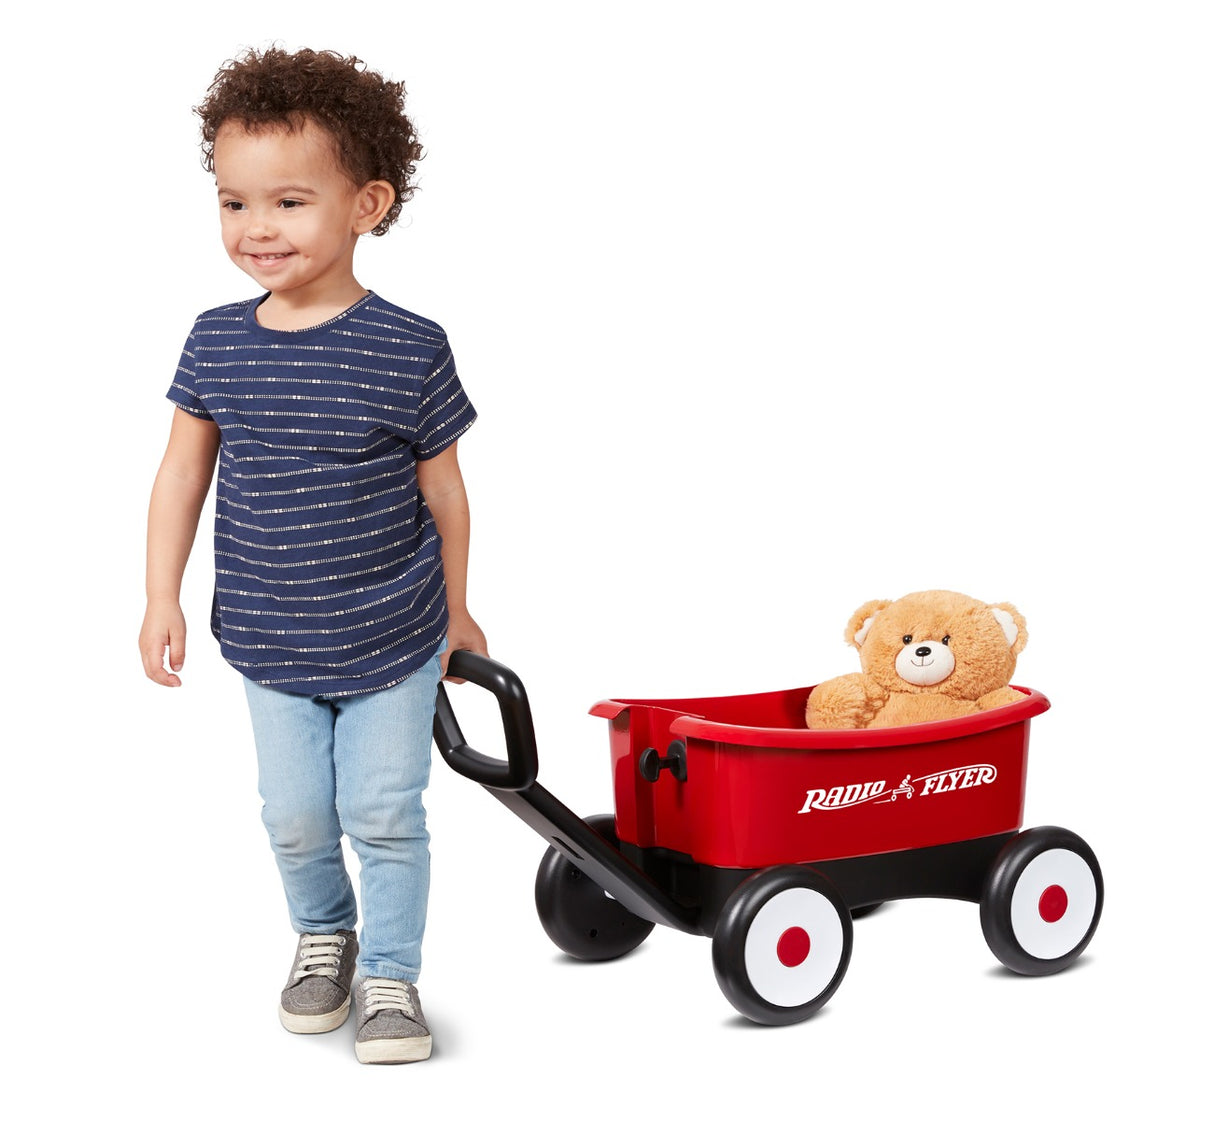 child pulling wagon with teddy bear inside